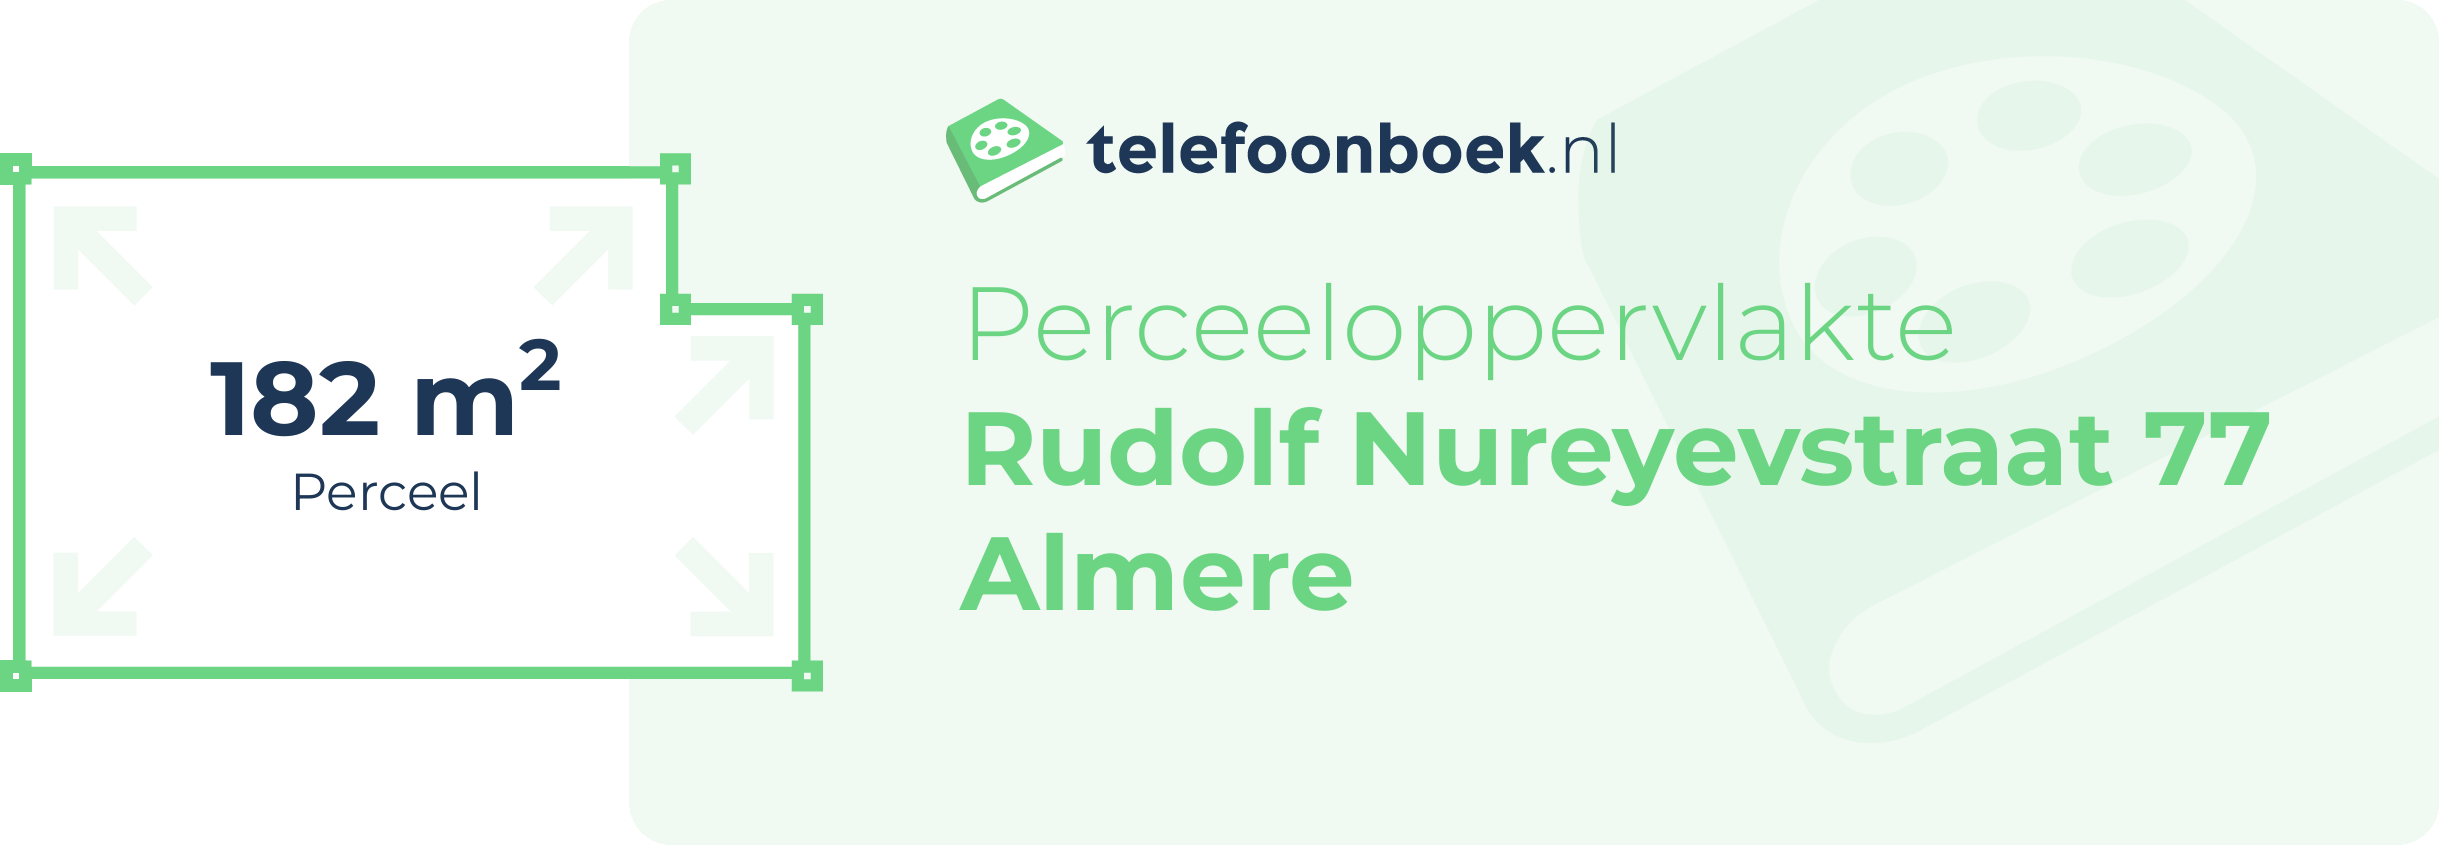 Perceeloppervlakte Rudolf Nureyevstraat 77 Almere